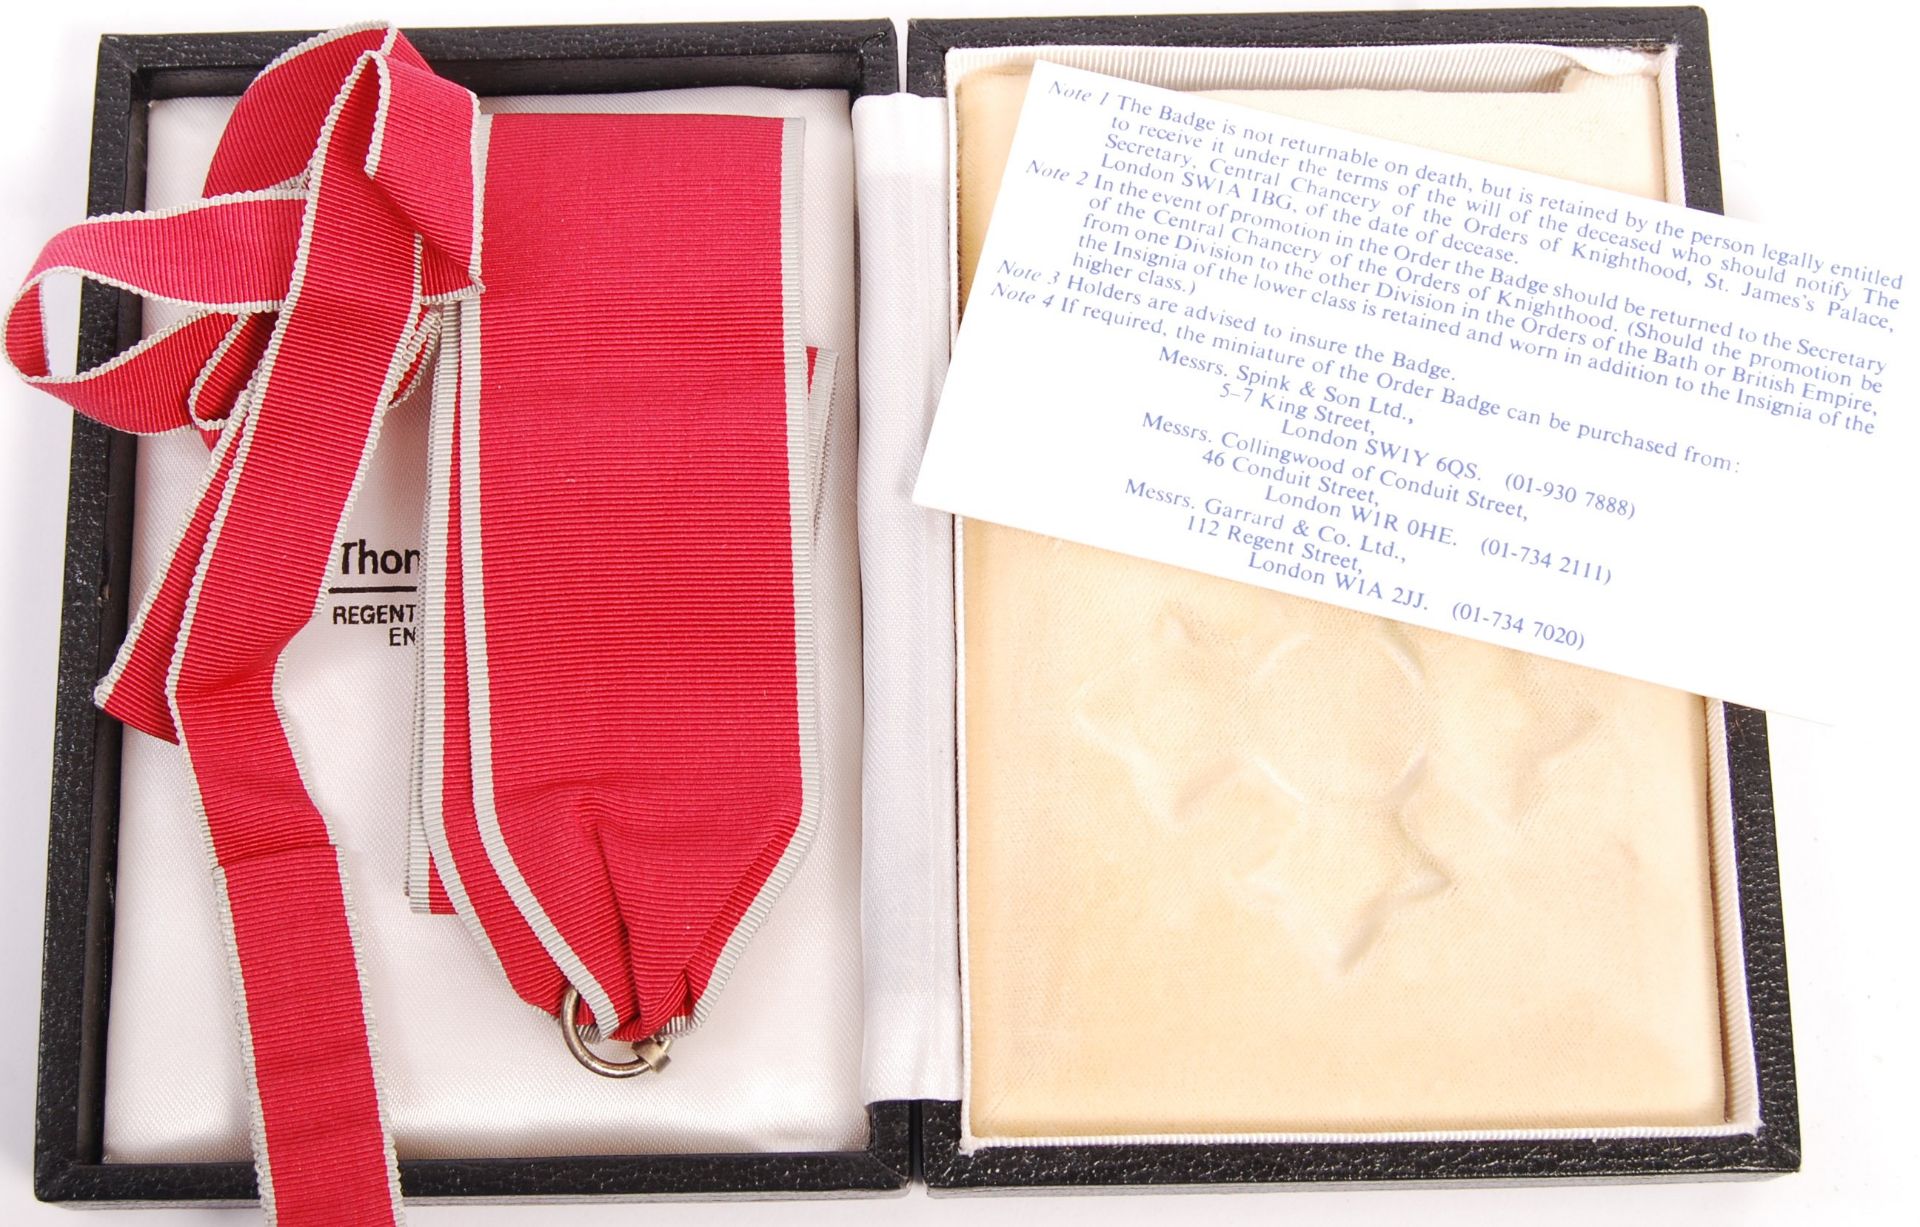 ORIGINAL CBE COMMANDER BRITISH EMPIRE MEDAL WITH BOX - Image 4 of 4